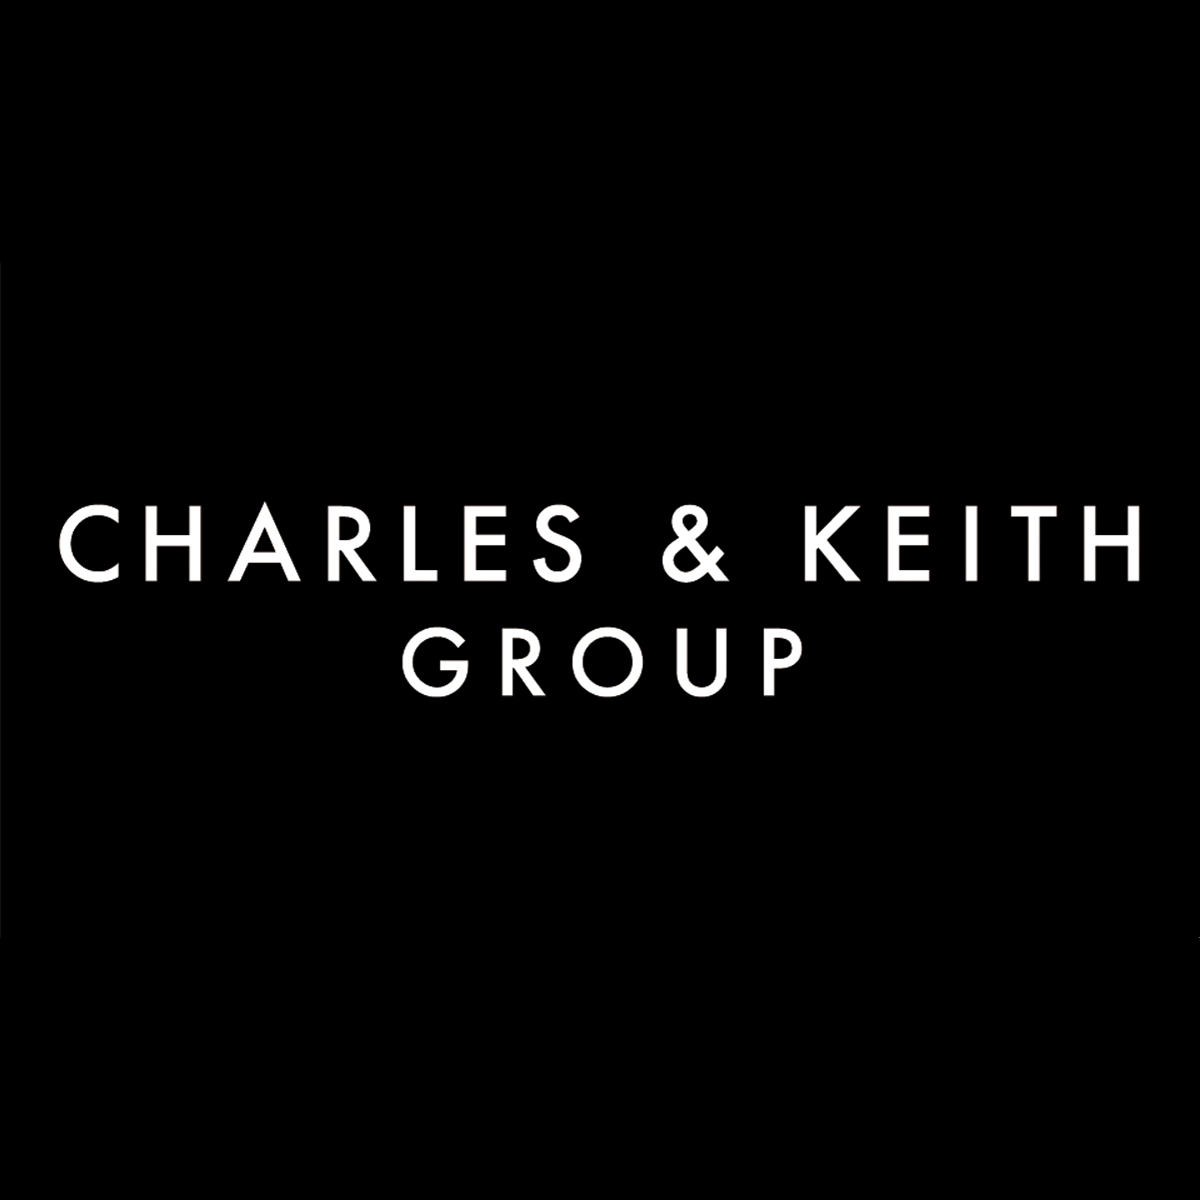 Charles & Keith - Valiram Group